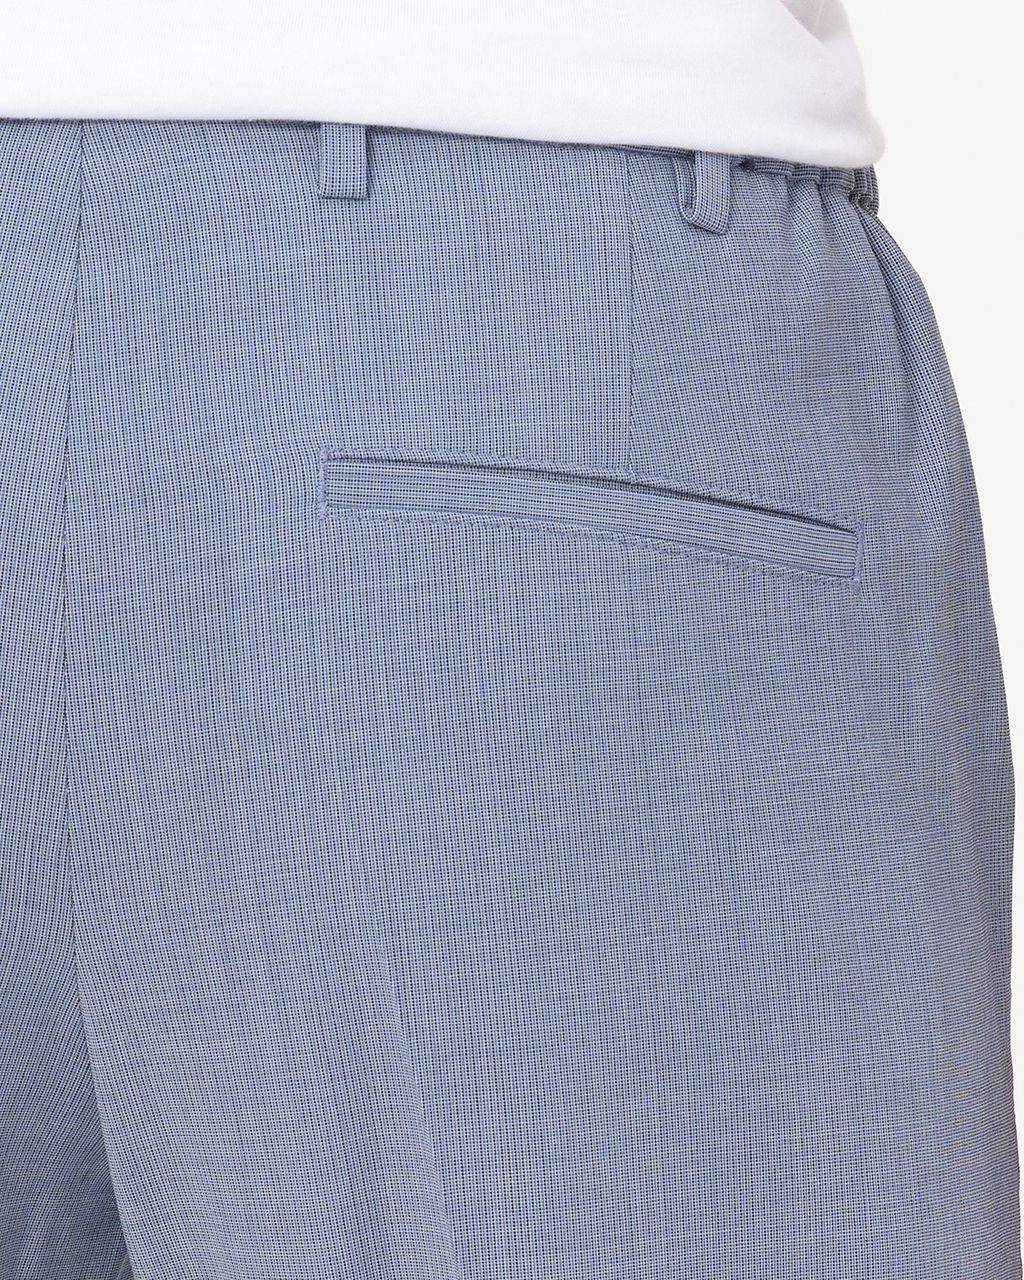 Pierre Cardin Mix & Match Pantalon Blauw 075750-001-102